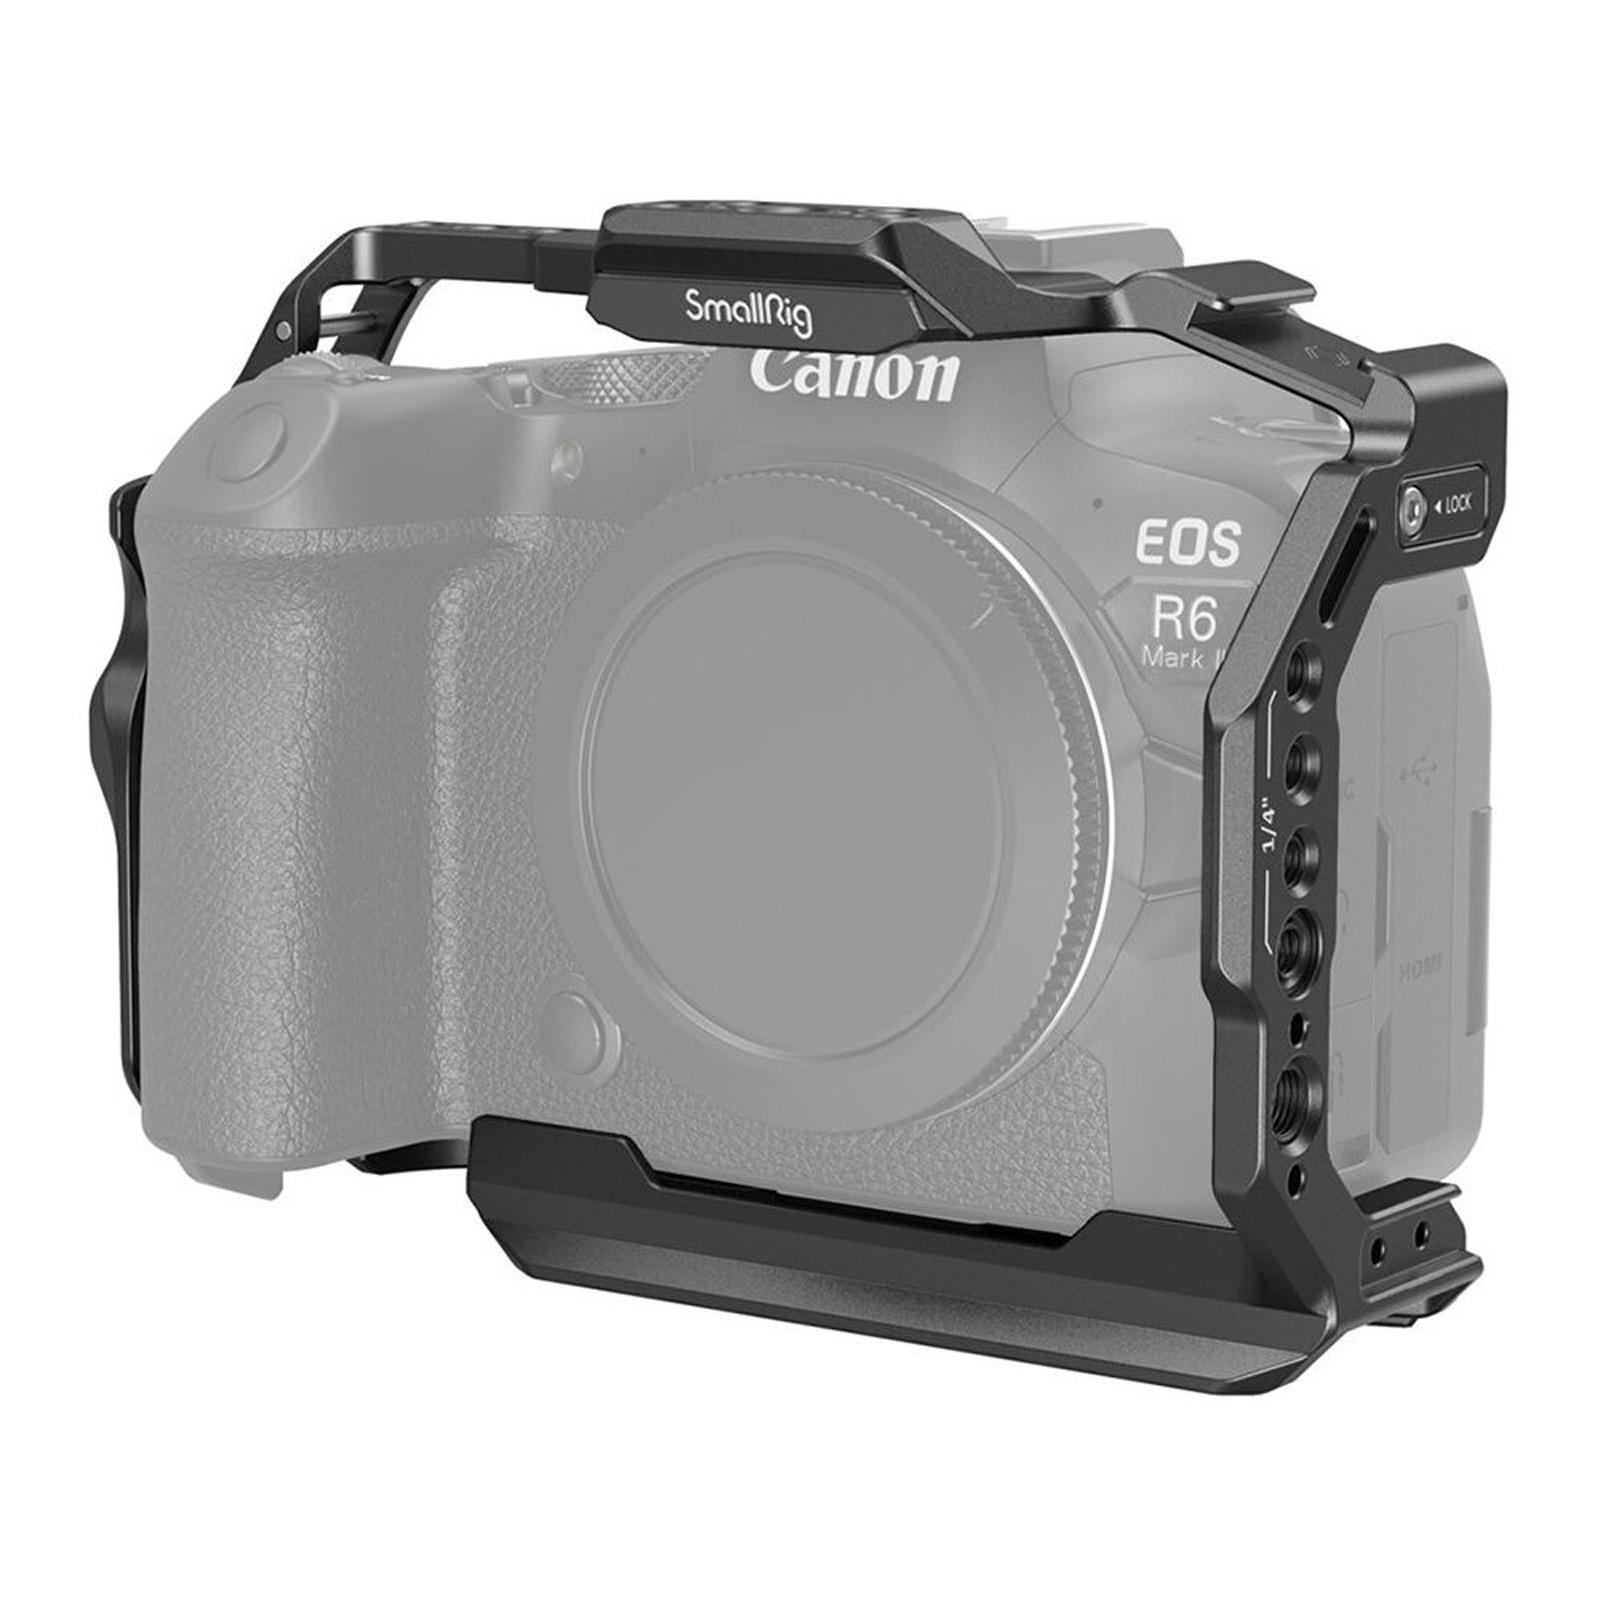 SmallRig Cage for Canon EOS R6 Mark II - 4159